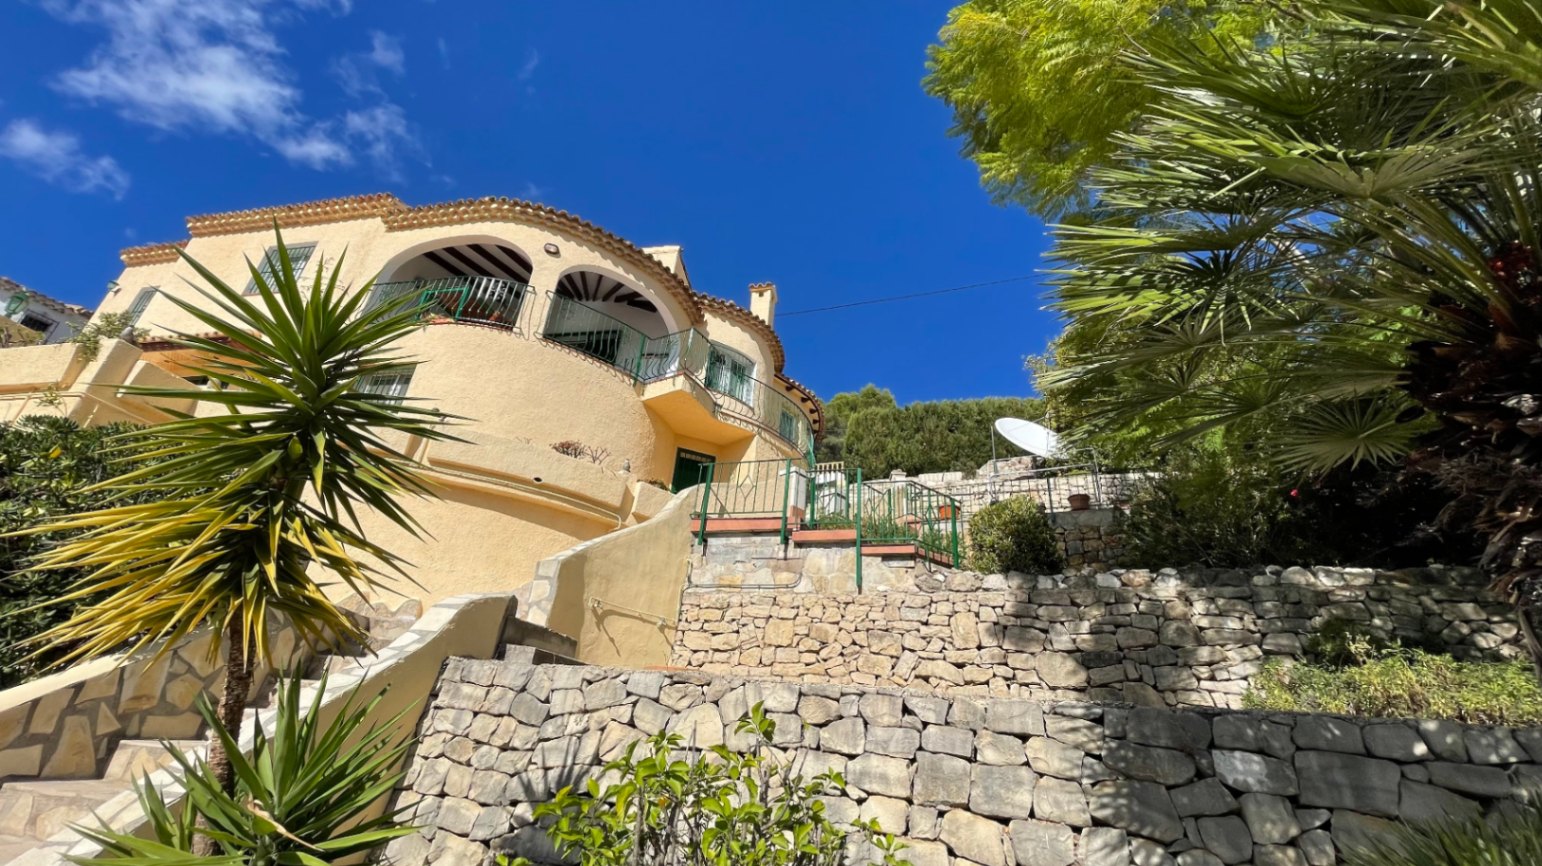 Villa for sale in Alcalali: Stunning views